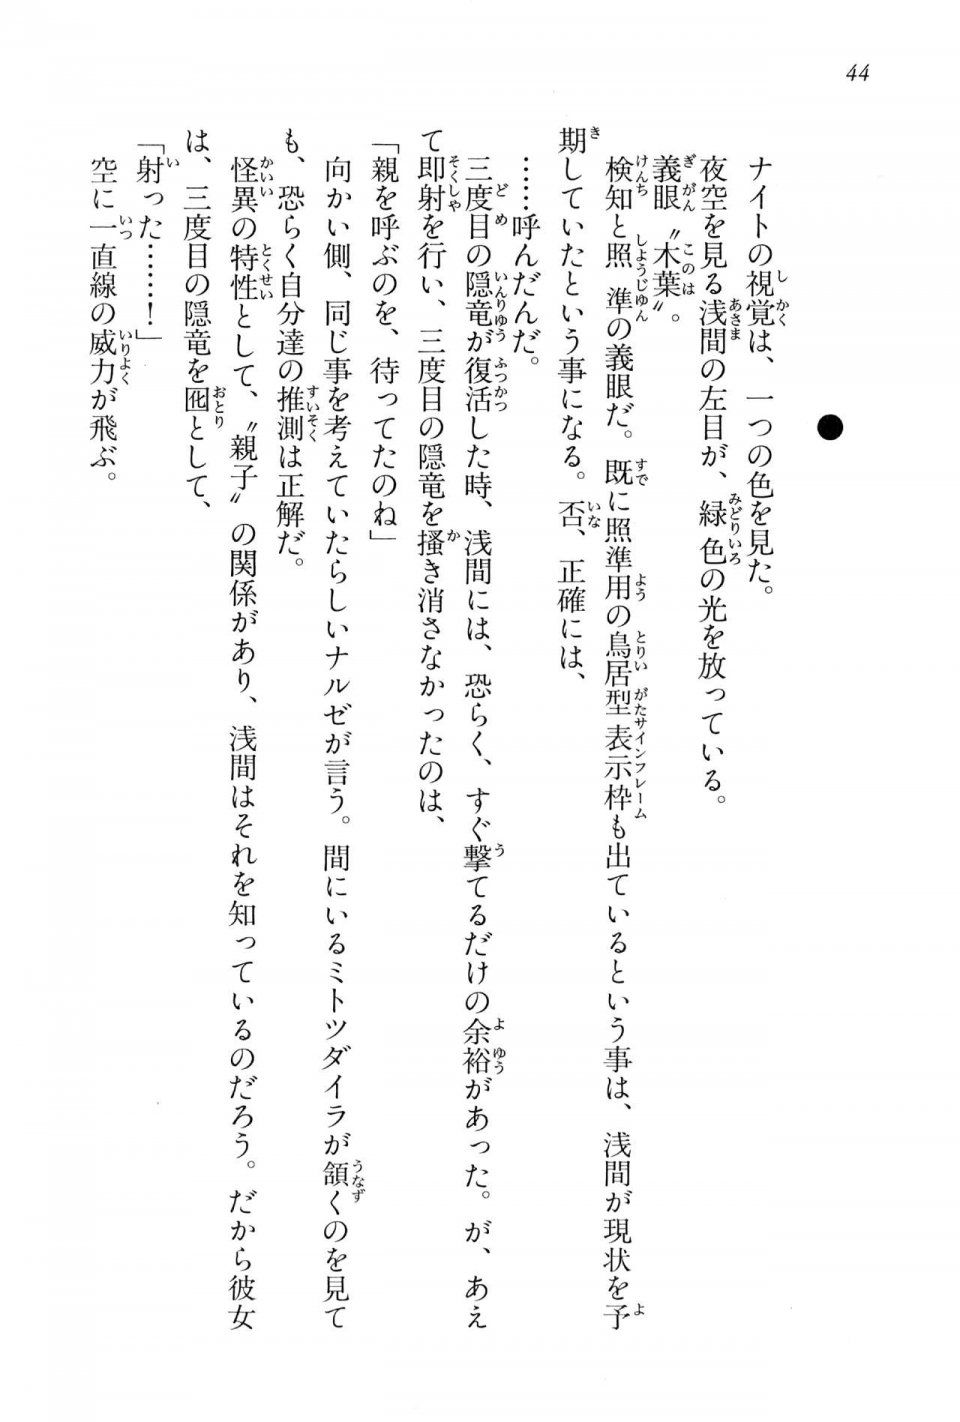 Kyoukai Senjou no Horizon BD Special Mininovel Vol 4(2B) - Photo #48